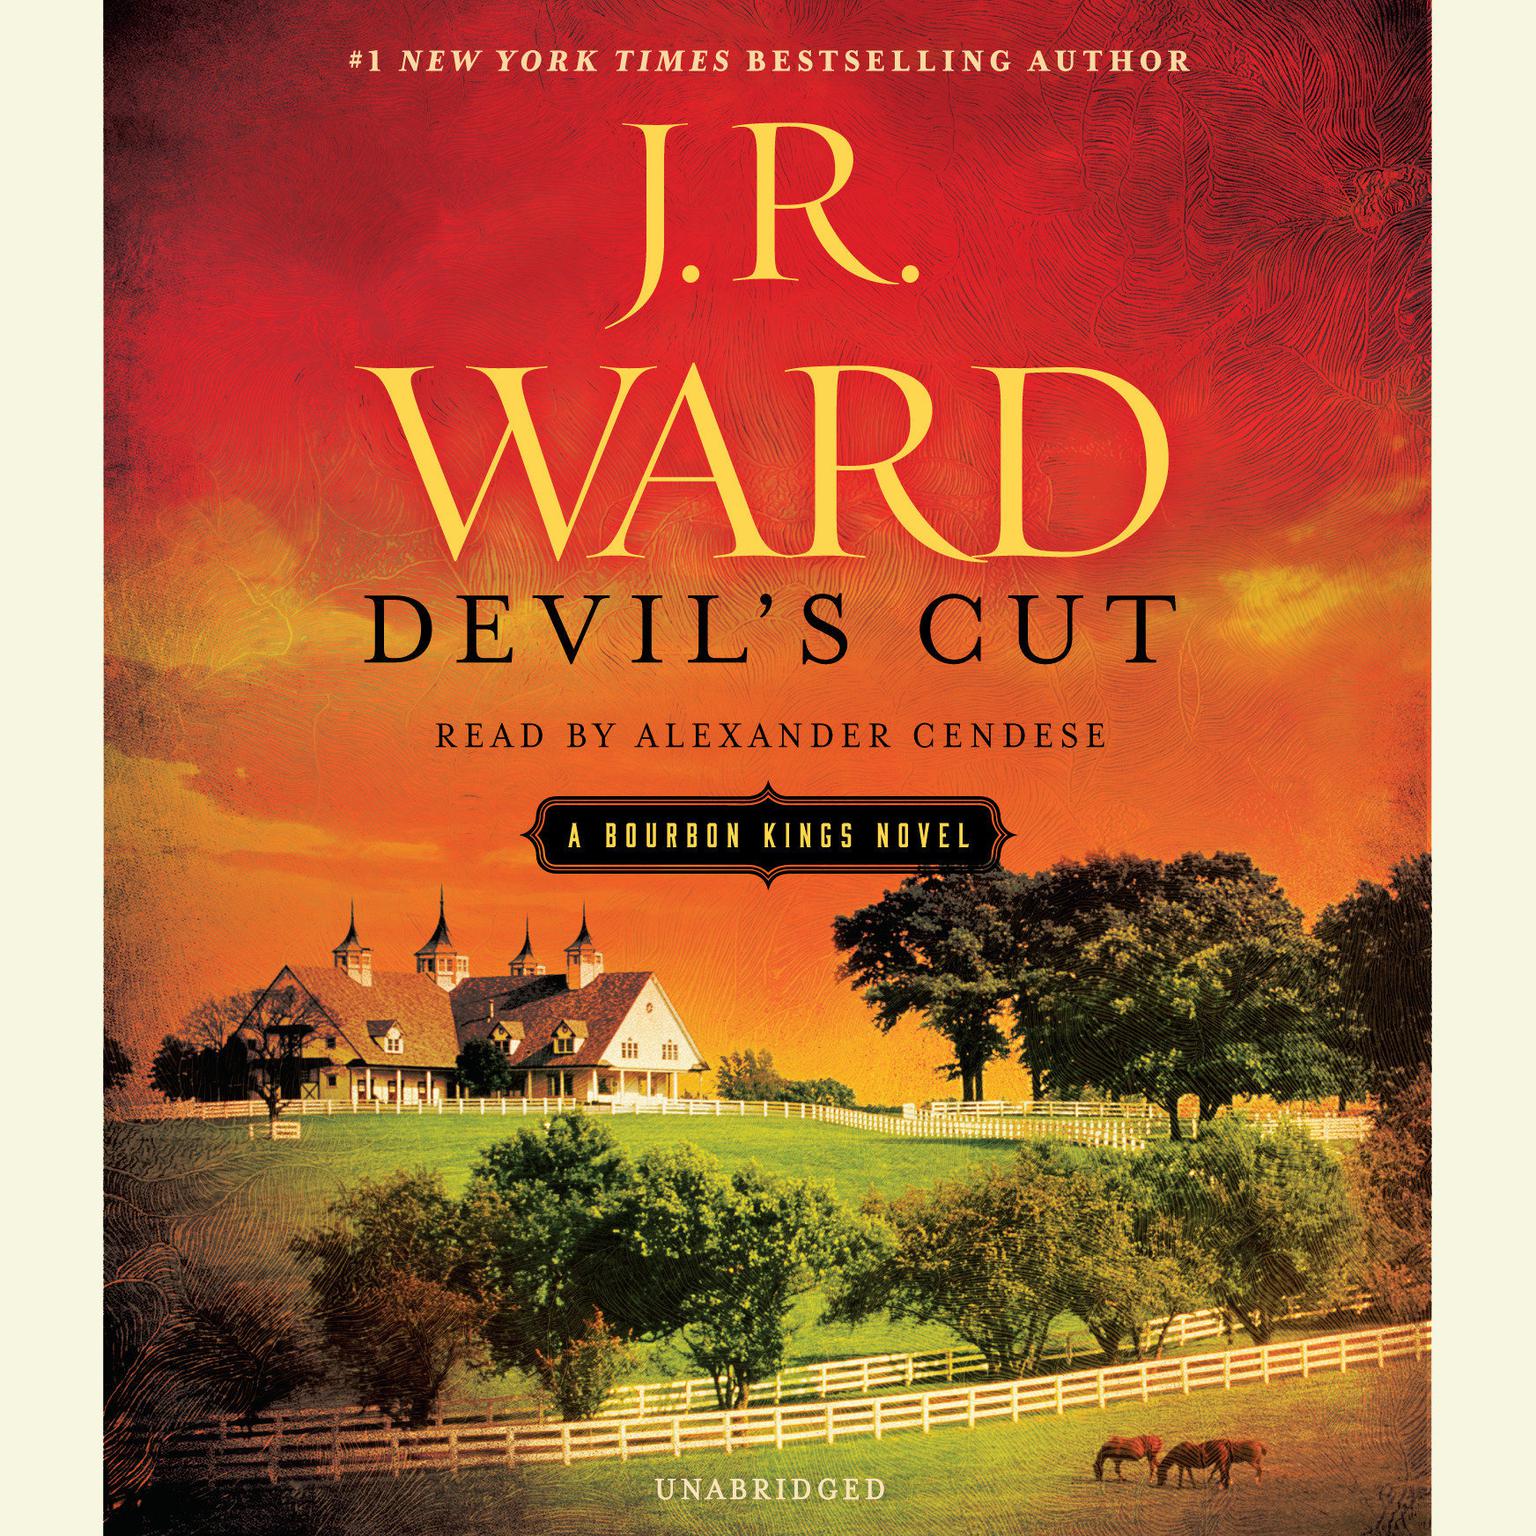 Devil’s Cut: A Bourbon Kings Novel Audiobook, by J. R. Ward